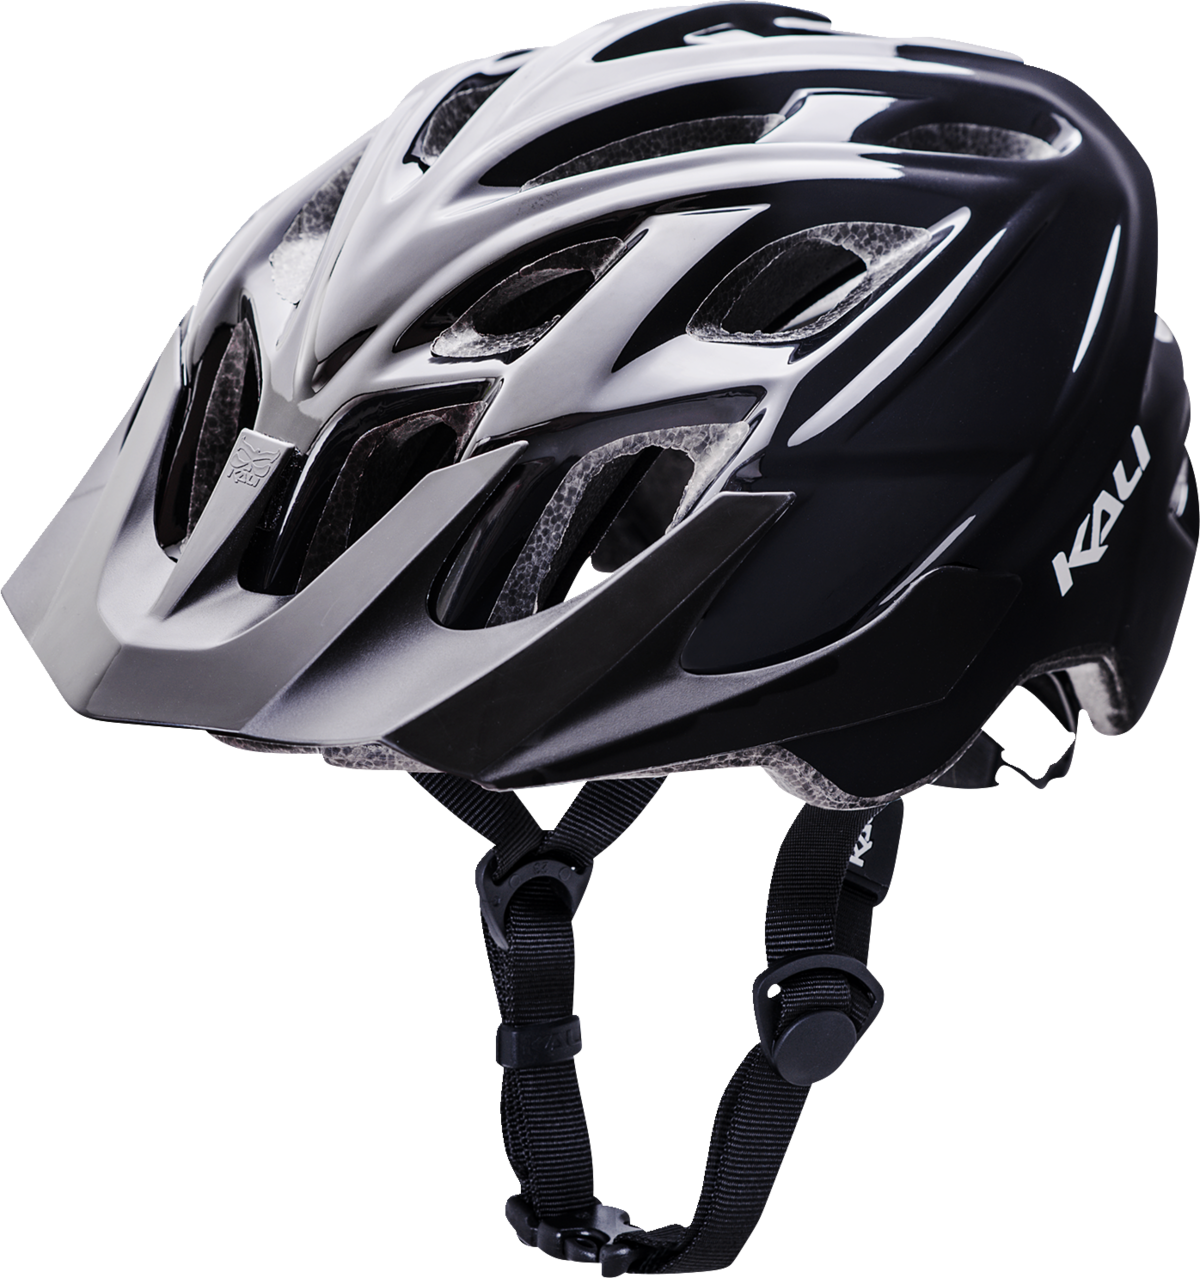 KALI Chakra Solo Helmet - Black - S/M 0221218116